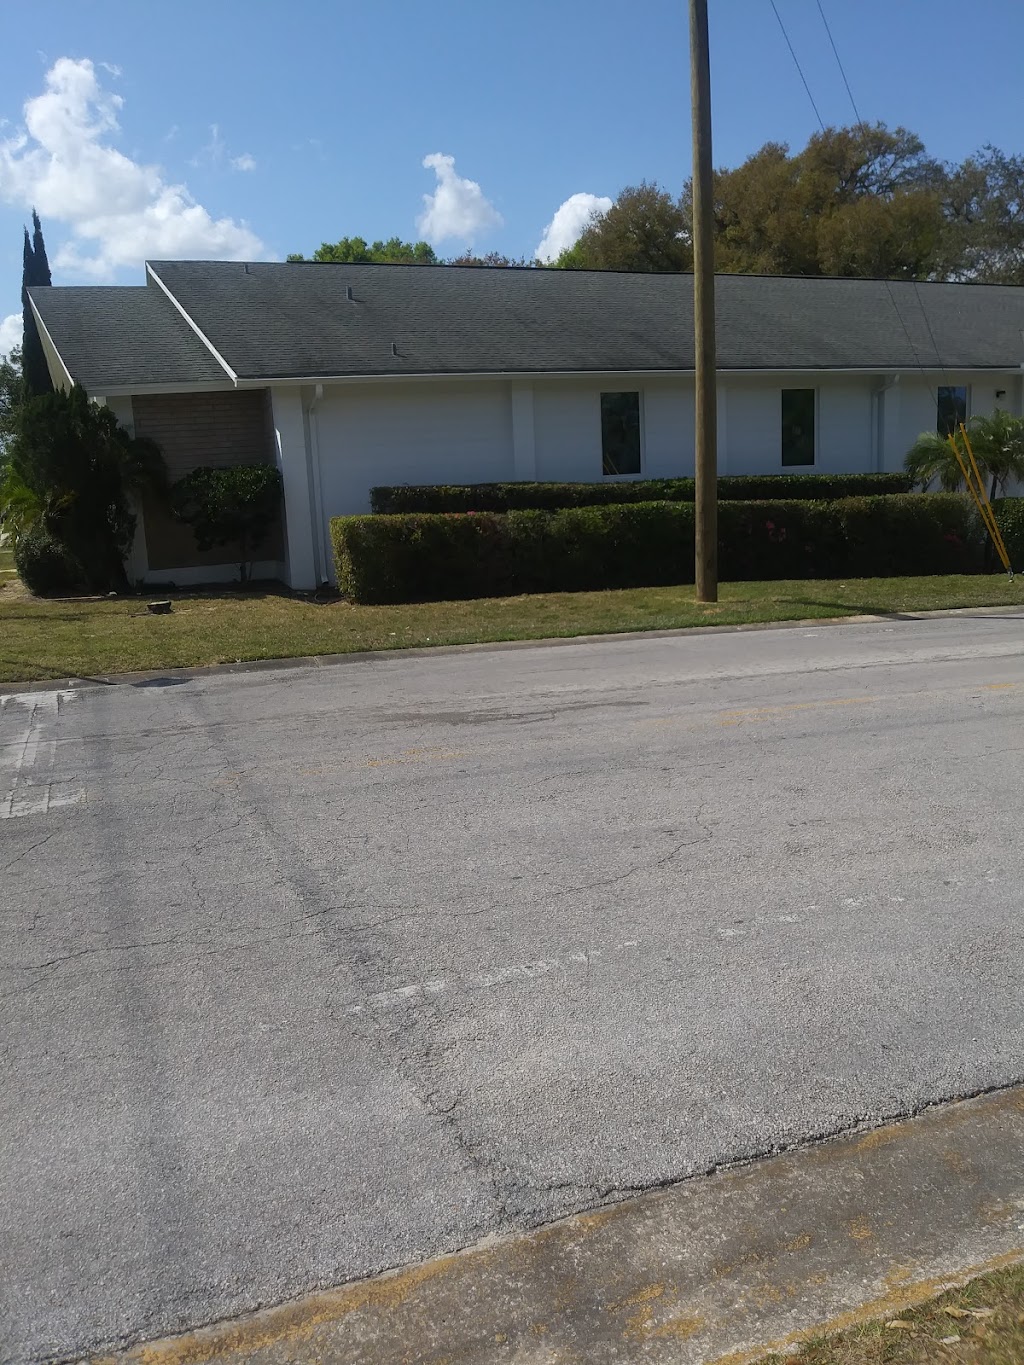 St James Ame Church - church  | Photo 1 of 1 | Address: 725 E McDonald Ave, Eustis, FL 32726, USA | Phone: (352) 357-6233